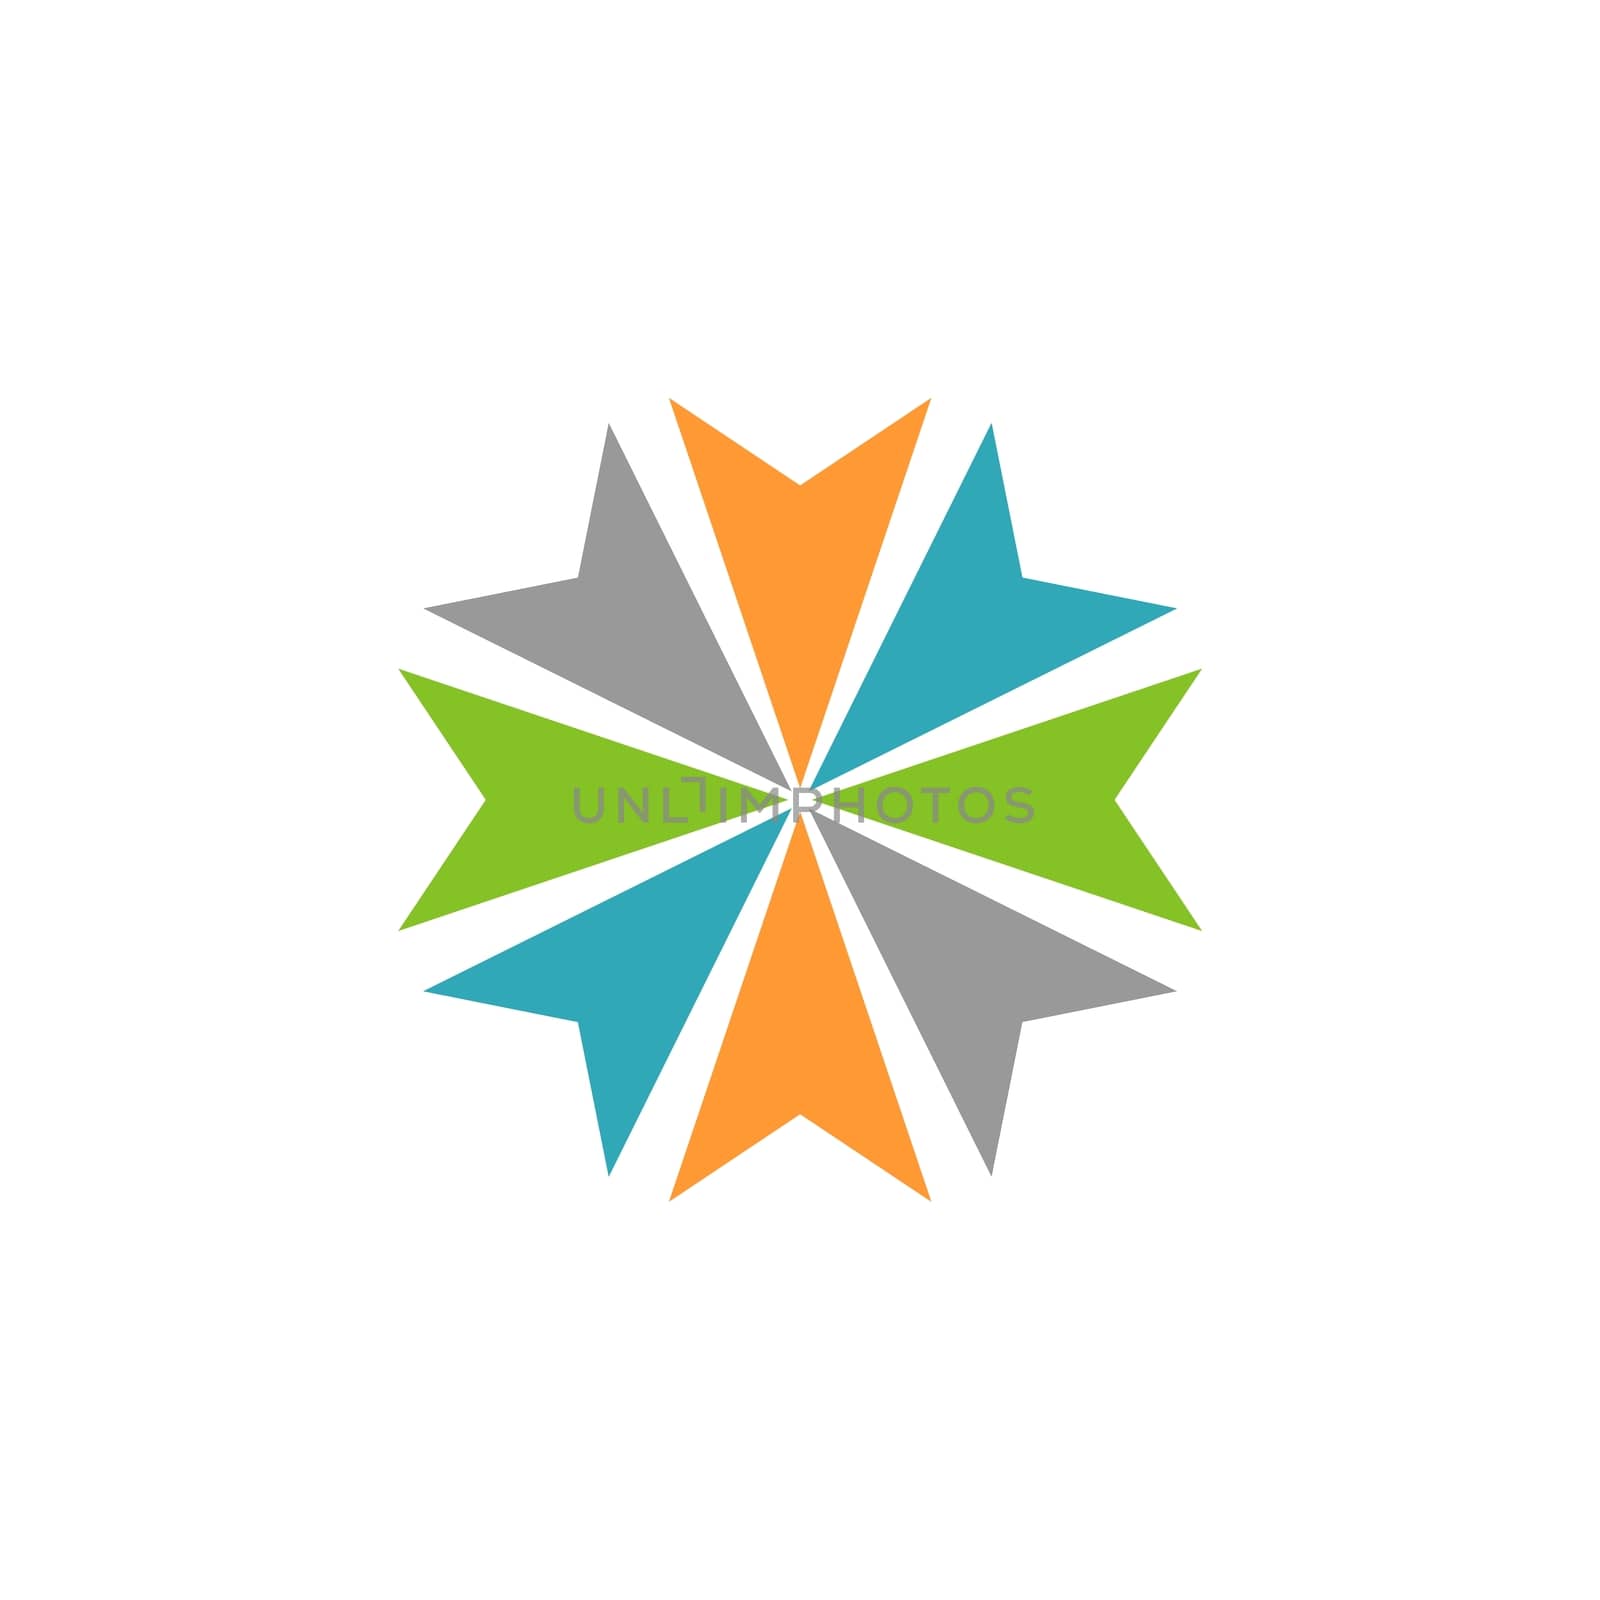 Abstract Arrow Circle Star Logo Template Illustration Design. Vector EPS 10.